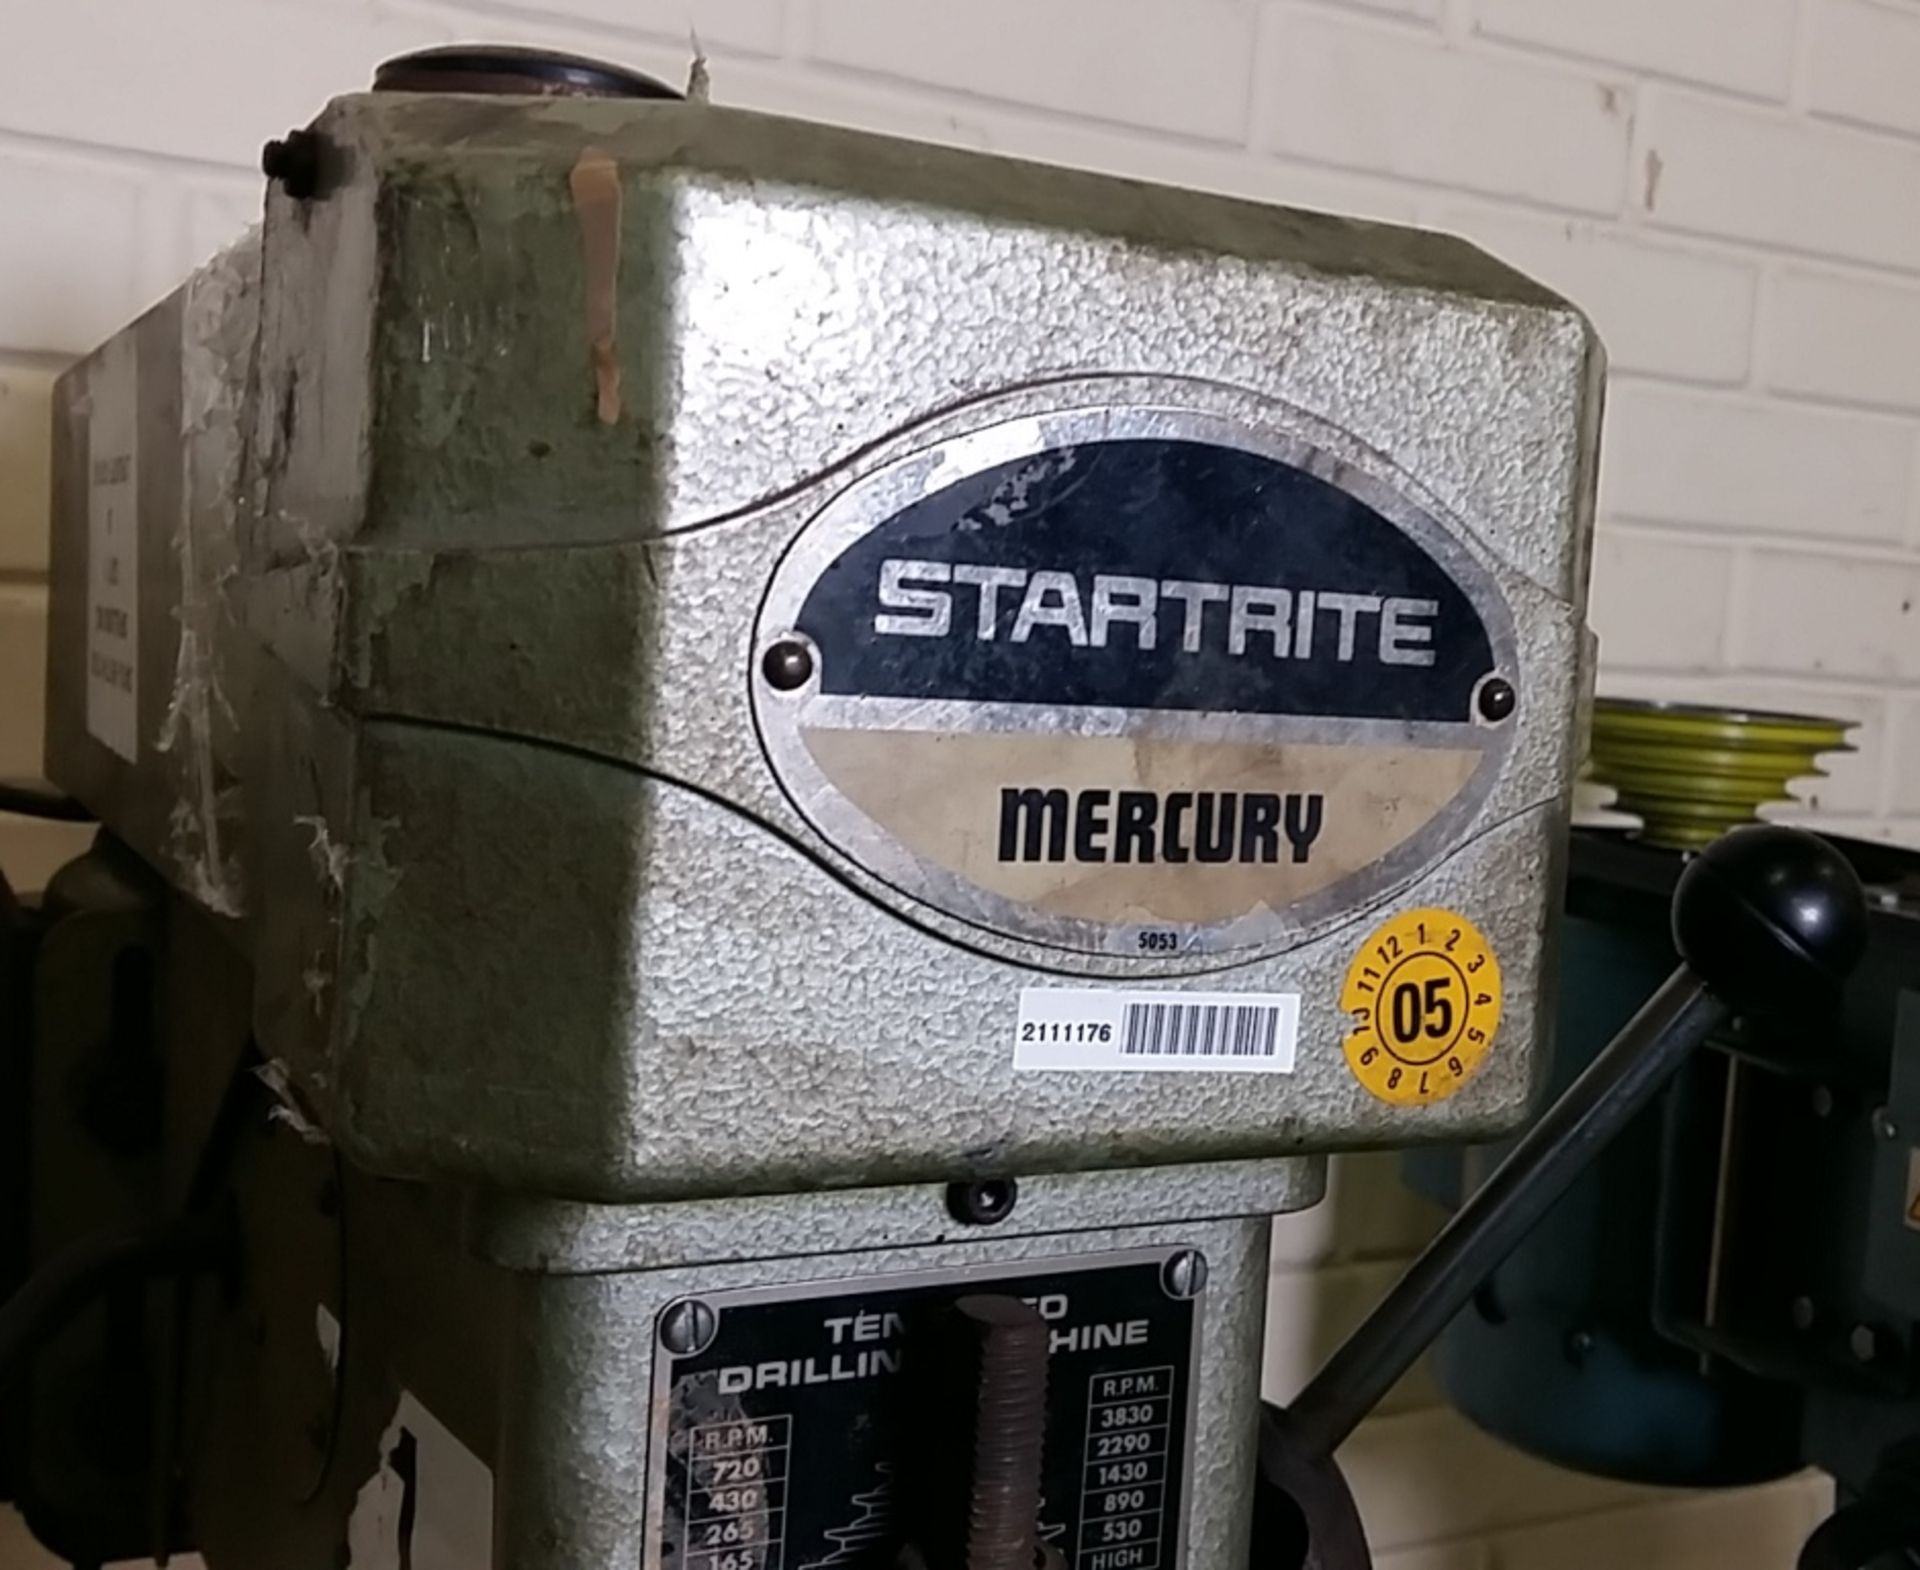 Startrite Mercury bench drill - Image 2 of 3